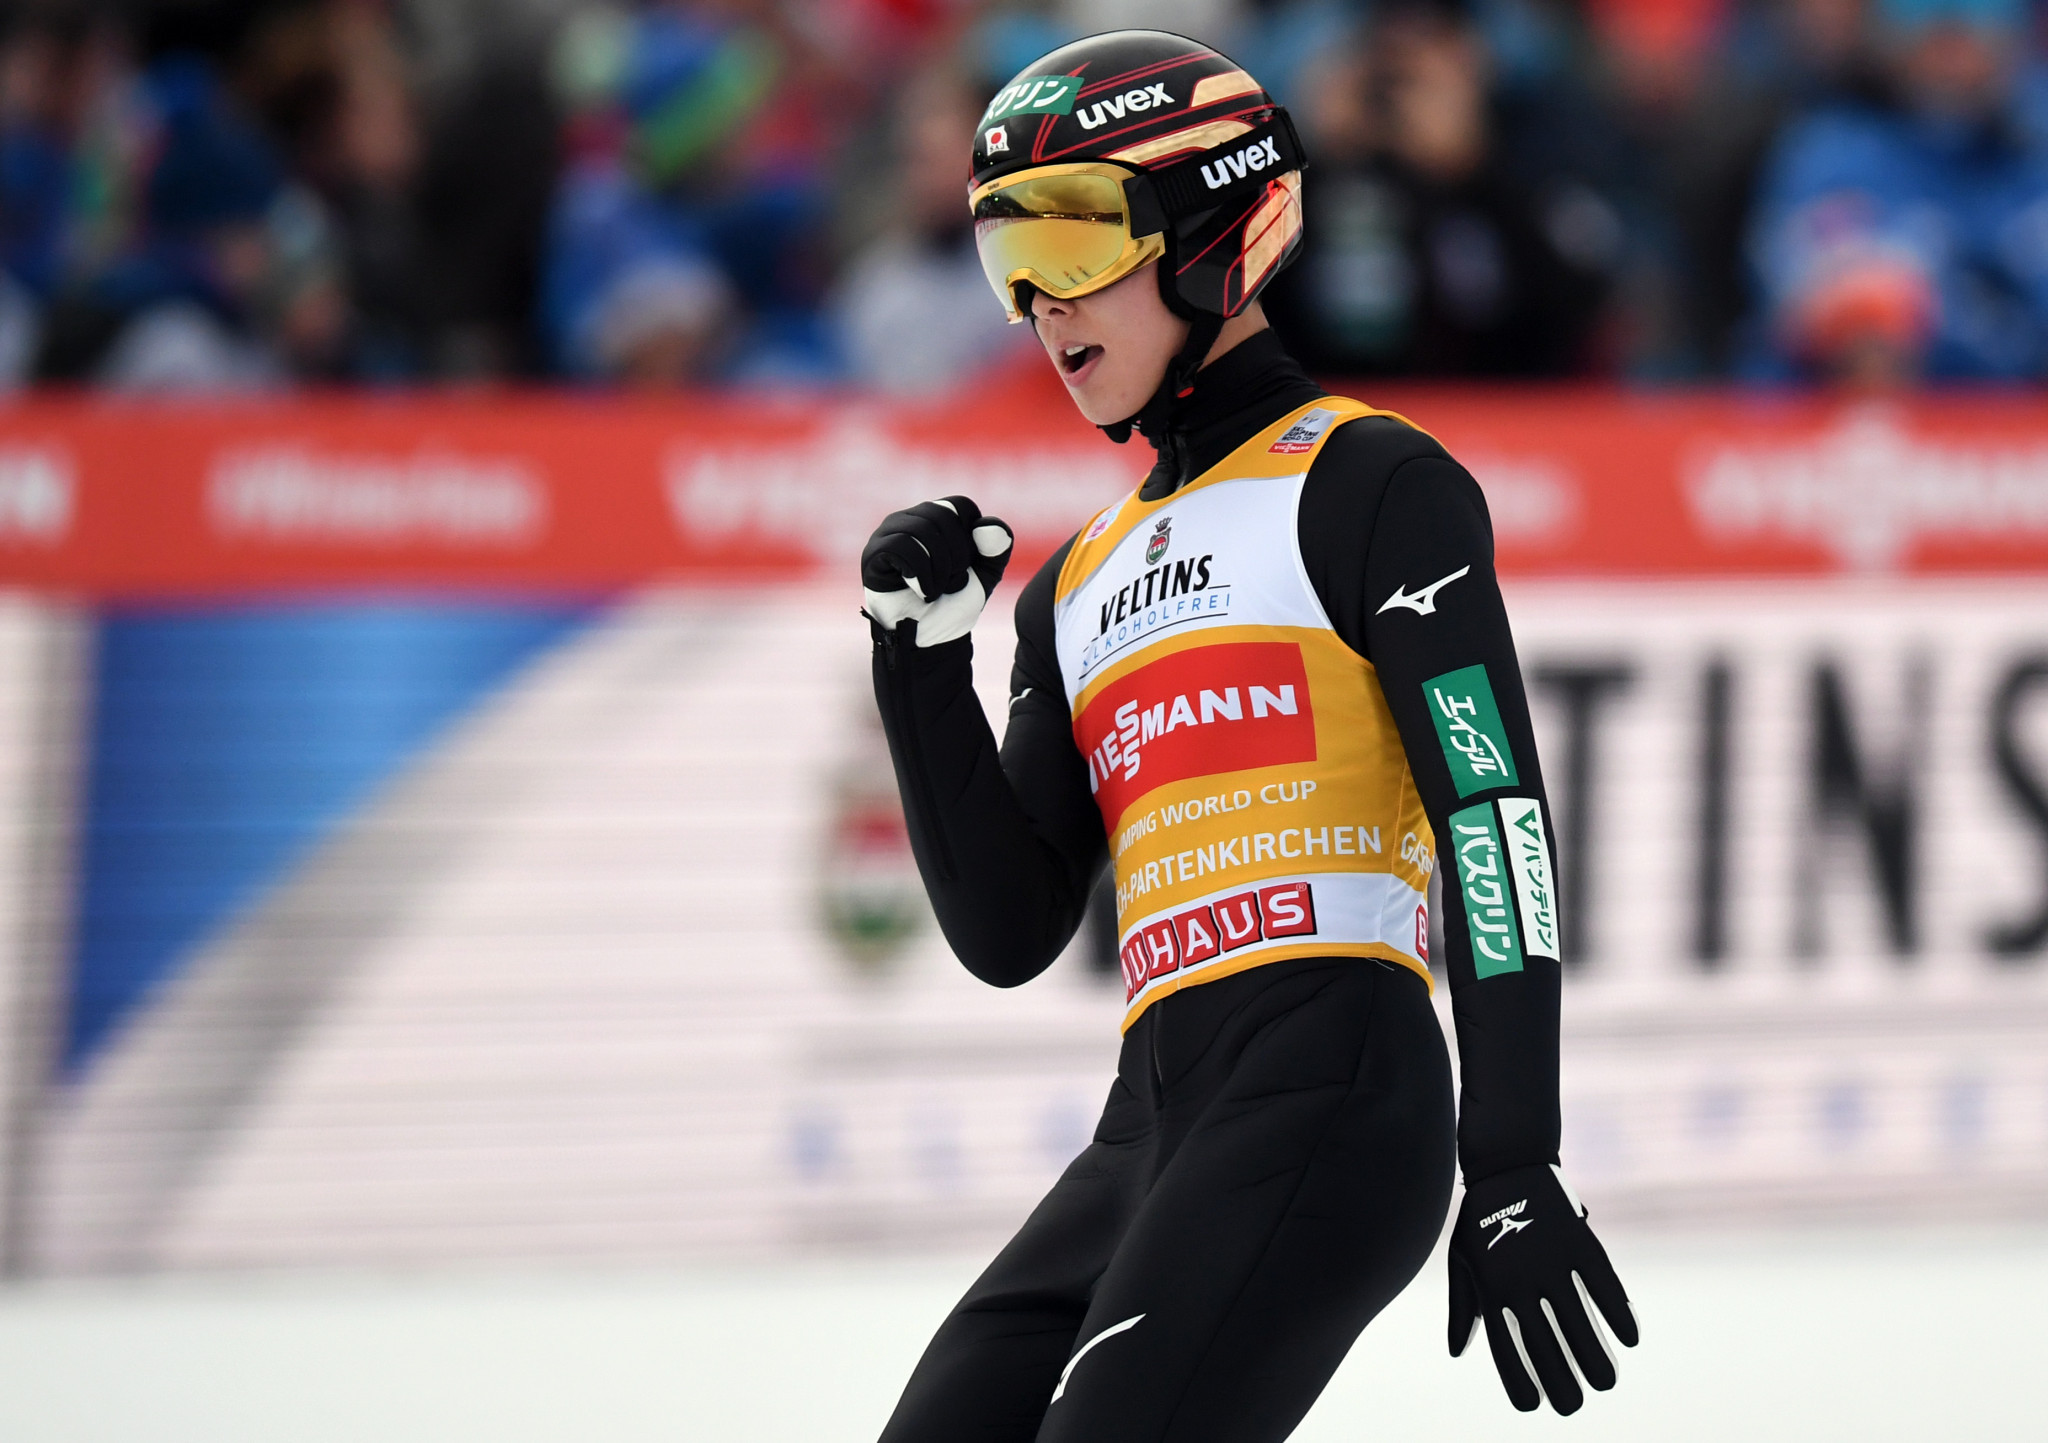 Kobayashi's incredible season continues with victory in Garmisch-Partenkirchen